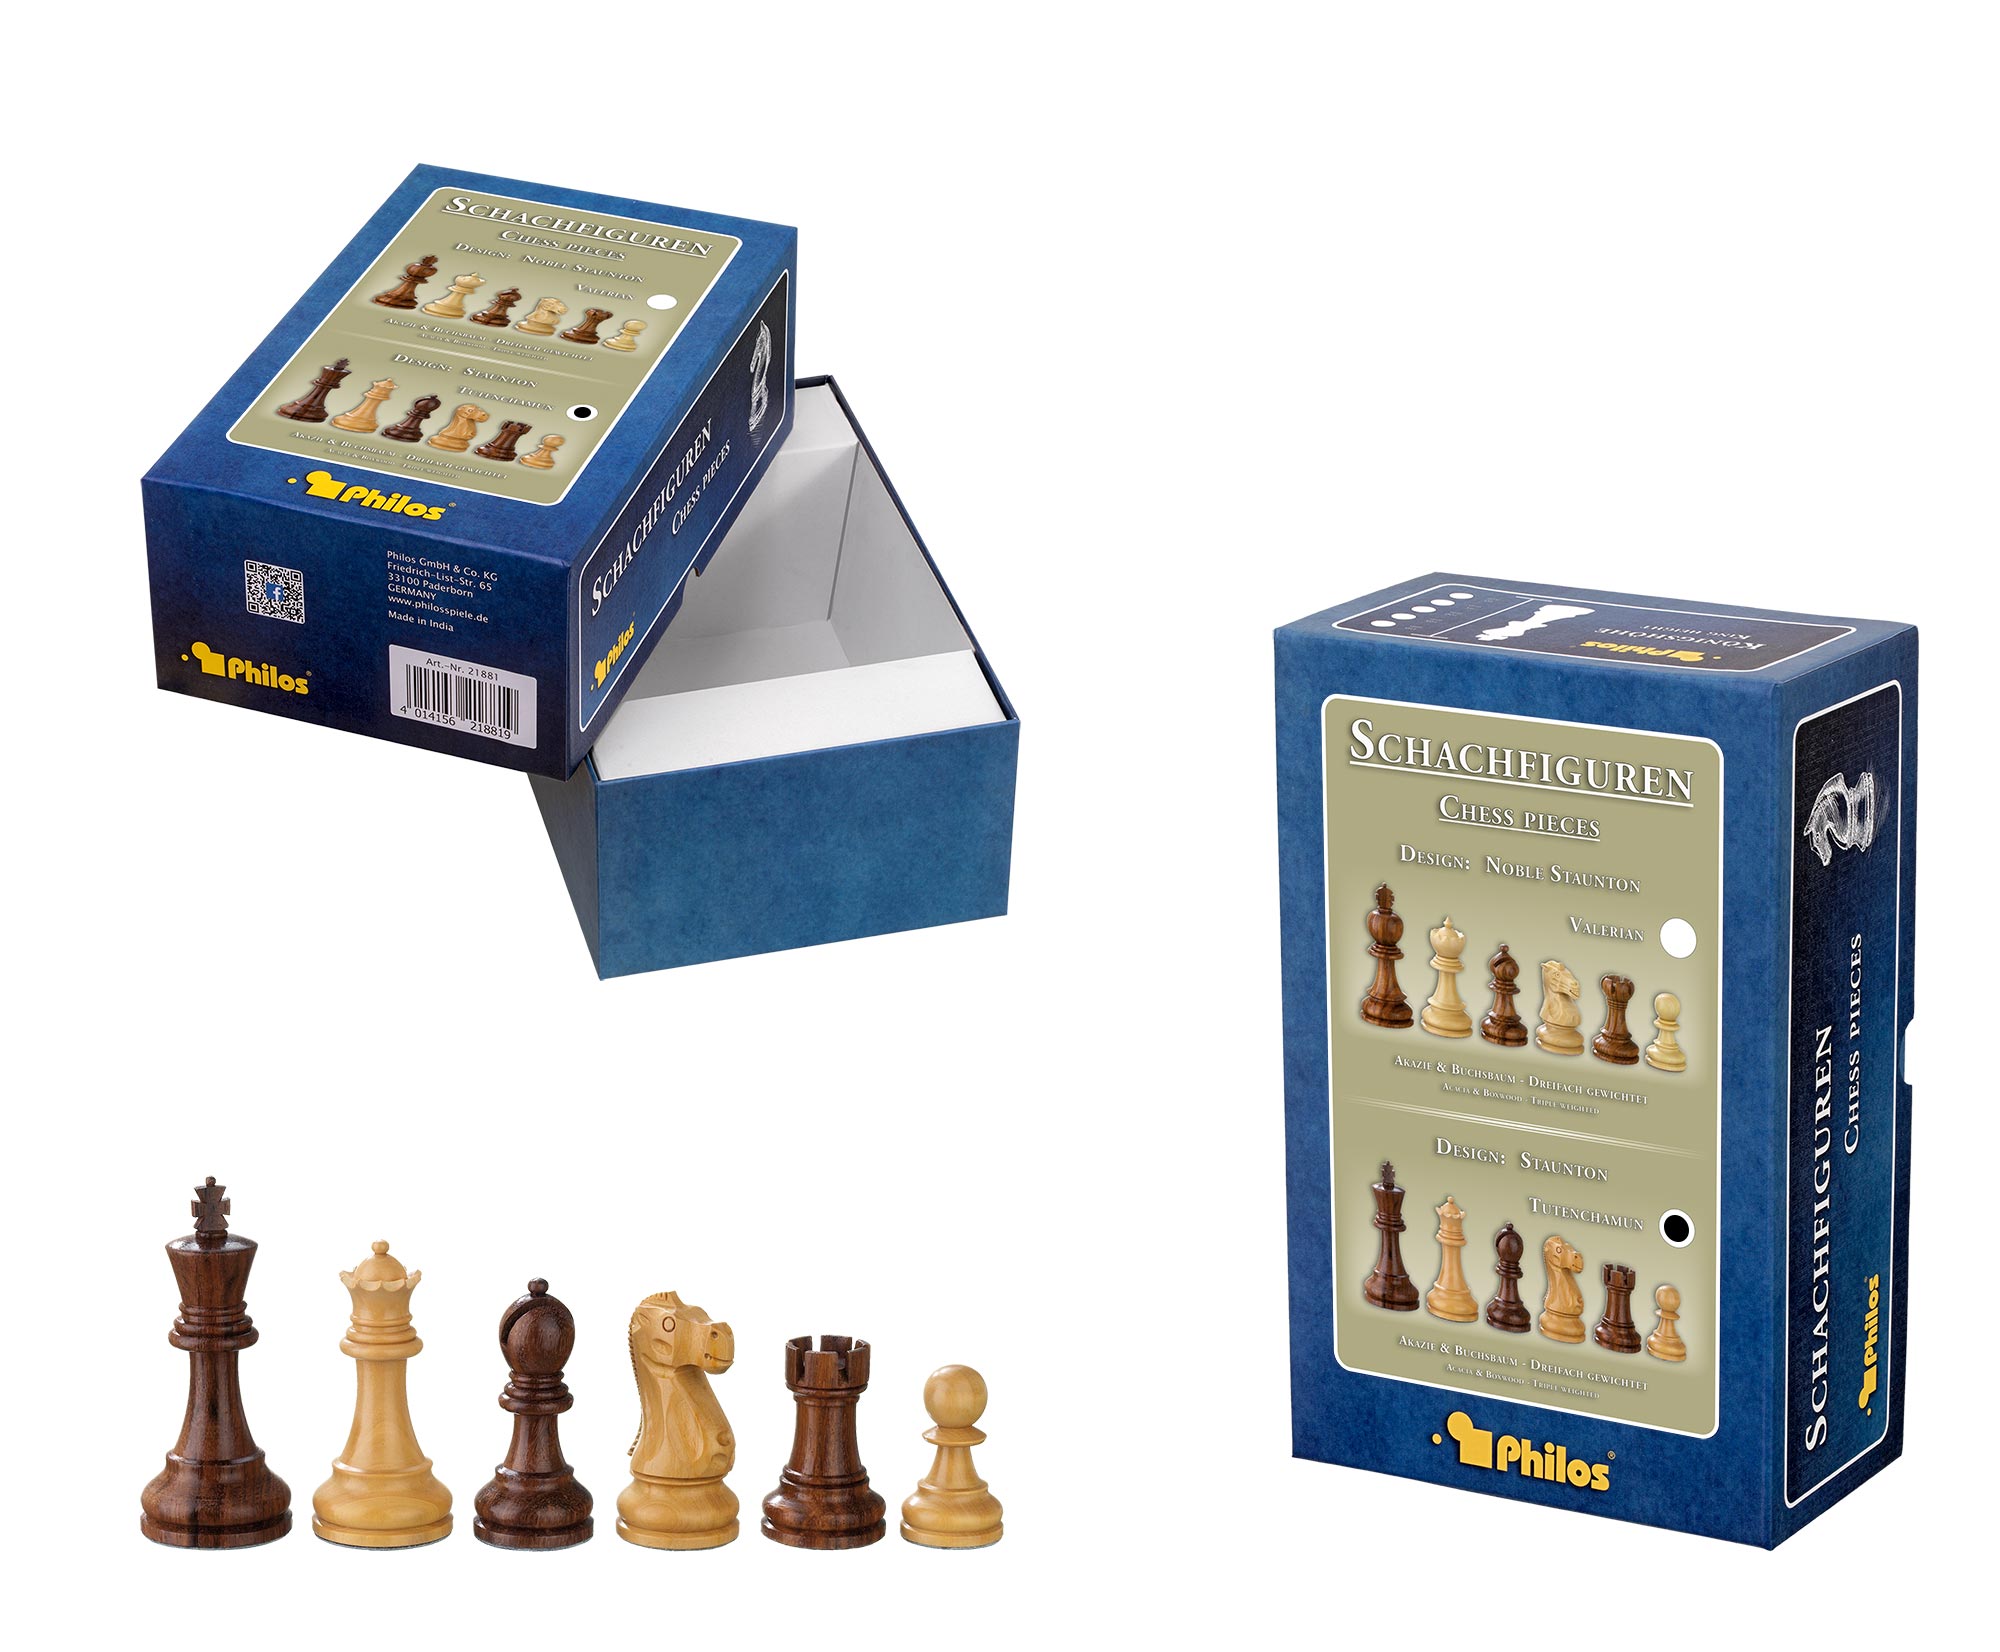 Schachfiguren Tutenchamun, Königshöhe 95 mm, in Set-Up Box